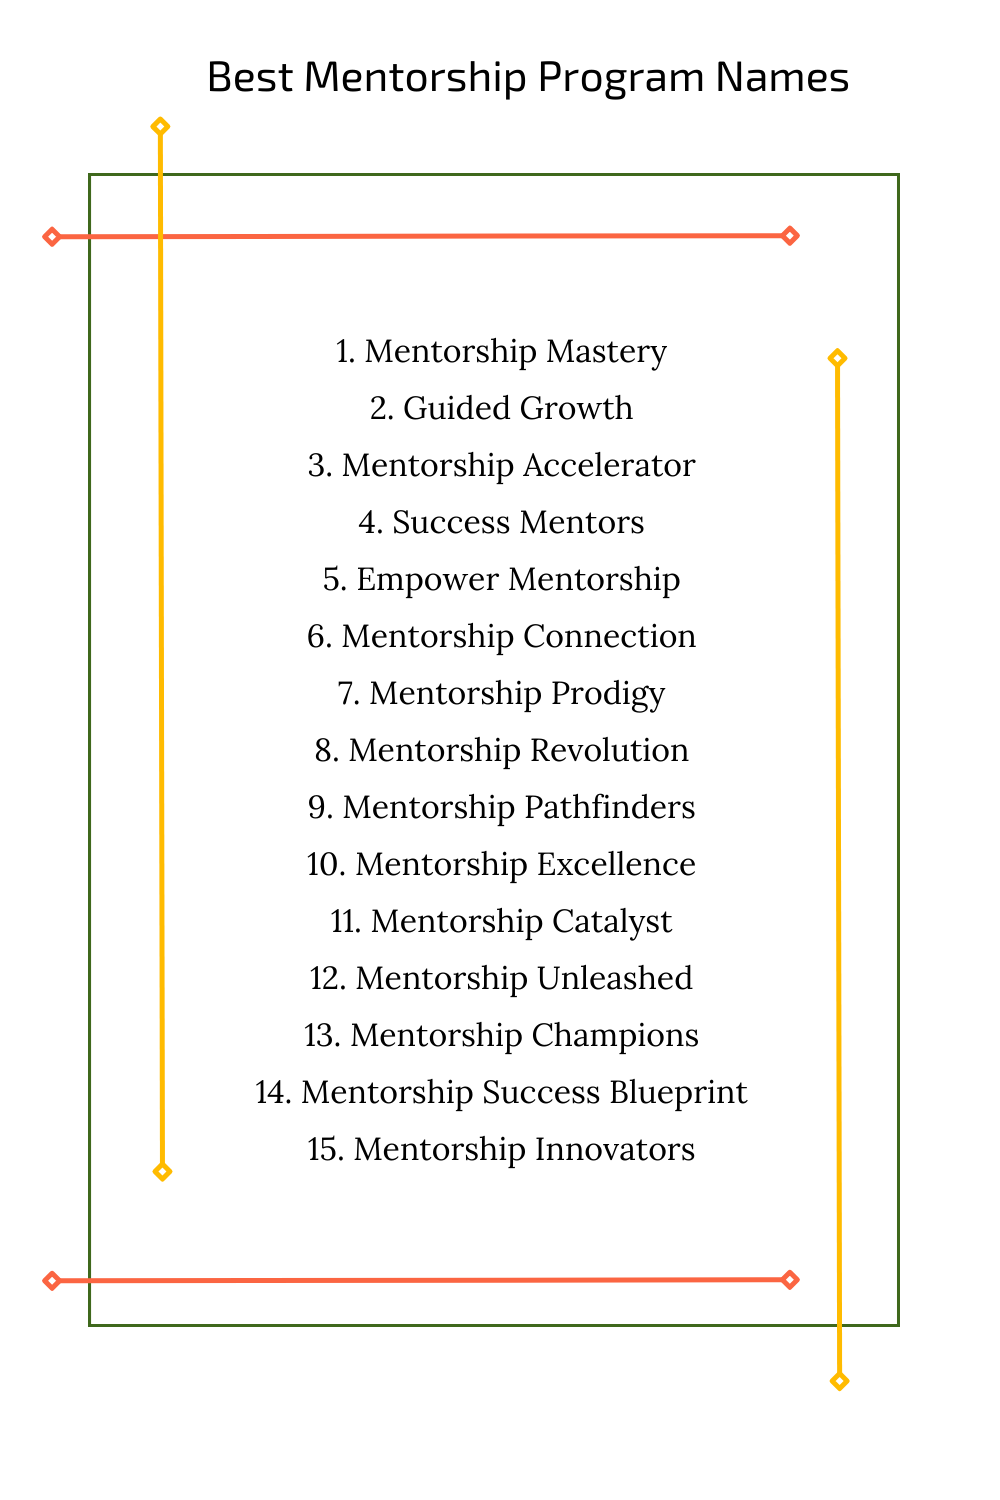 Best Mentorship Program Names